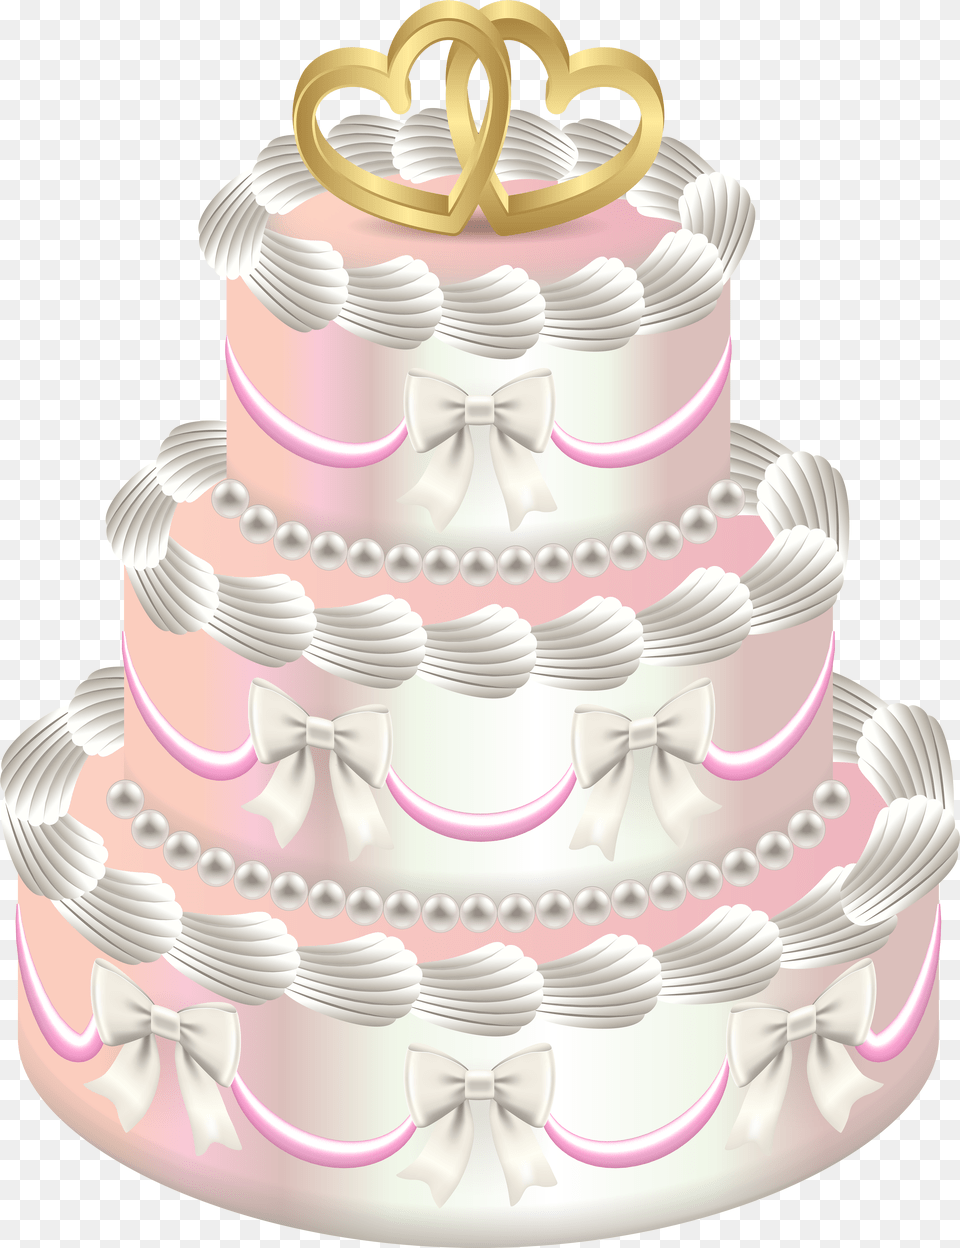 Tall Clipart Birthday Cake Best Birthday Cake Hd, Scoreboard, Diagram, Uml Diagram Free Png